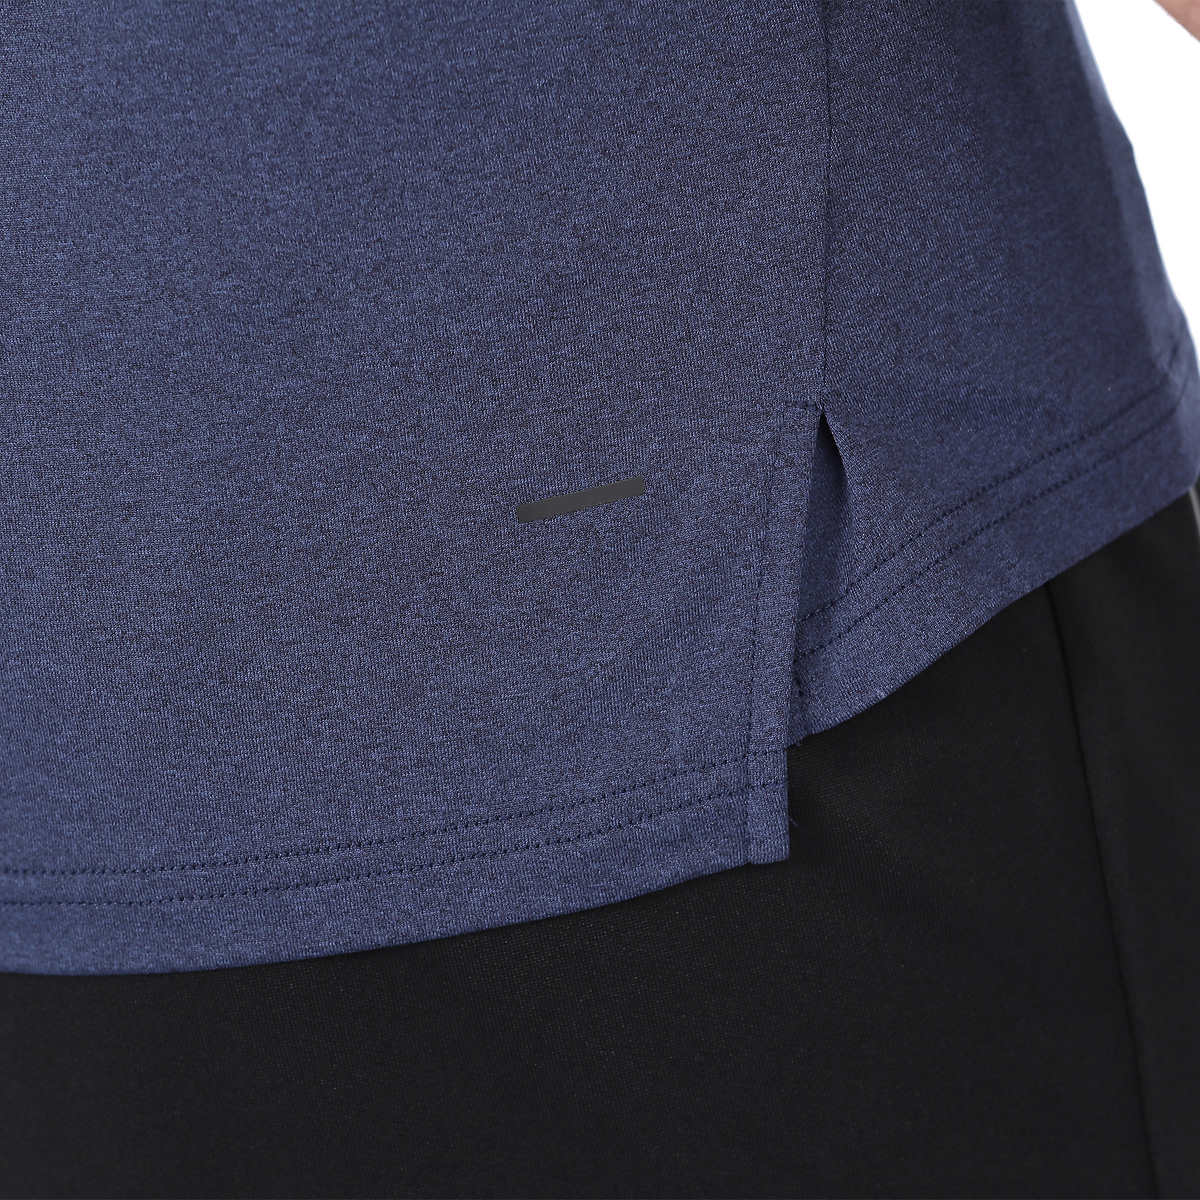 Spyder Men's Active Short Sleeve Tee Moisture Wicking 4 Way Stretch T-Shirt